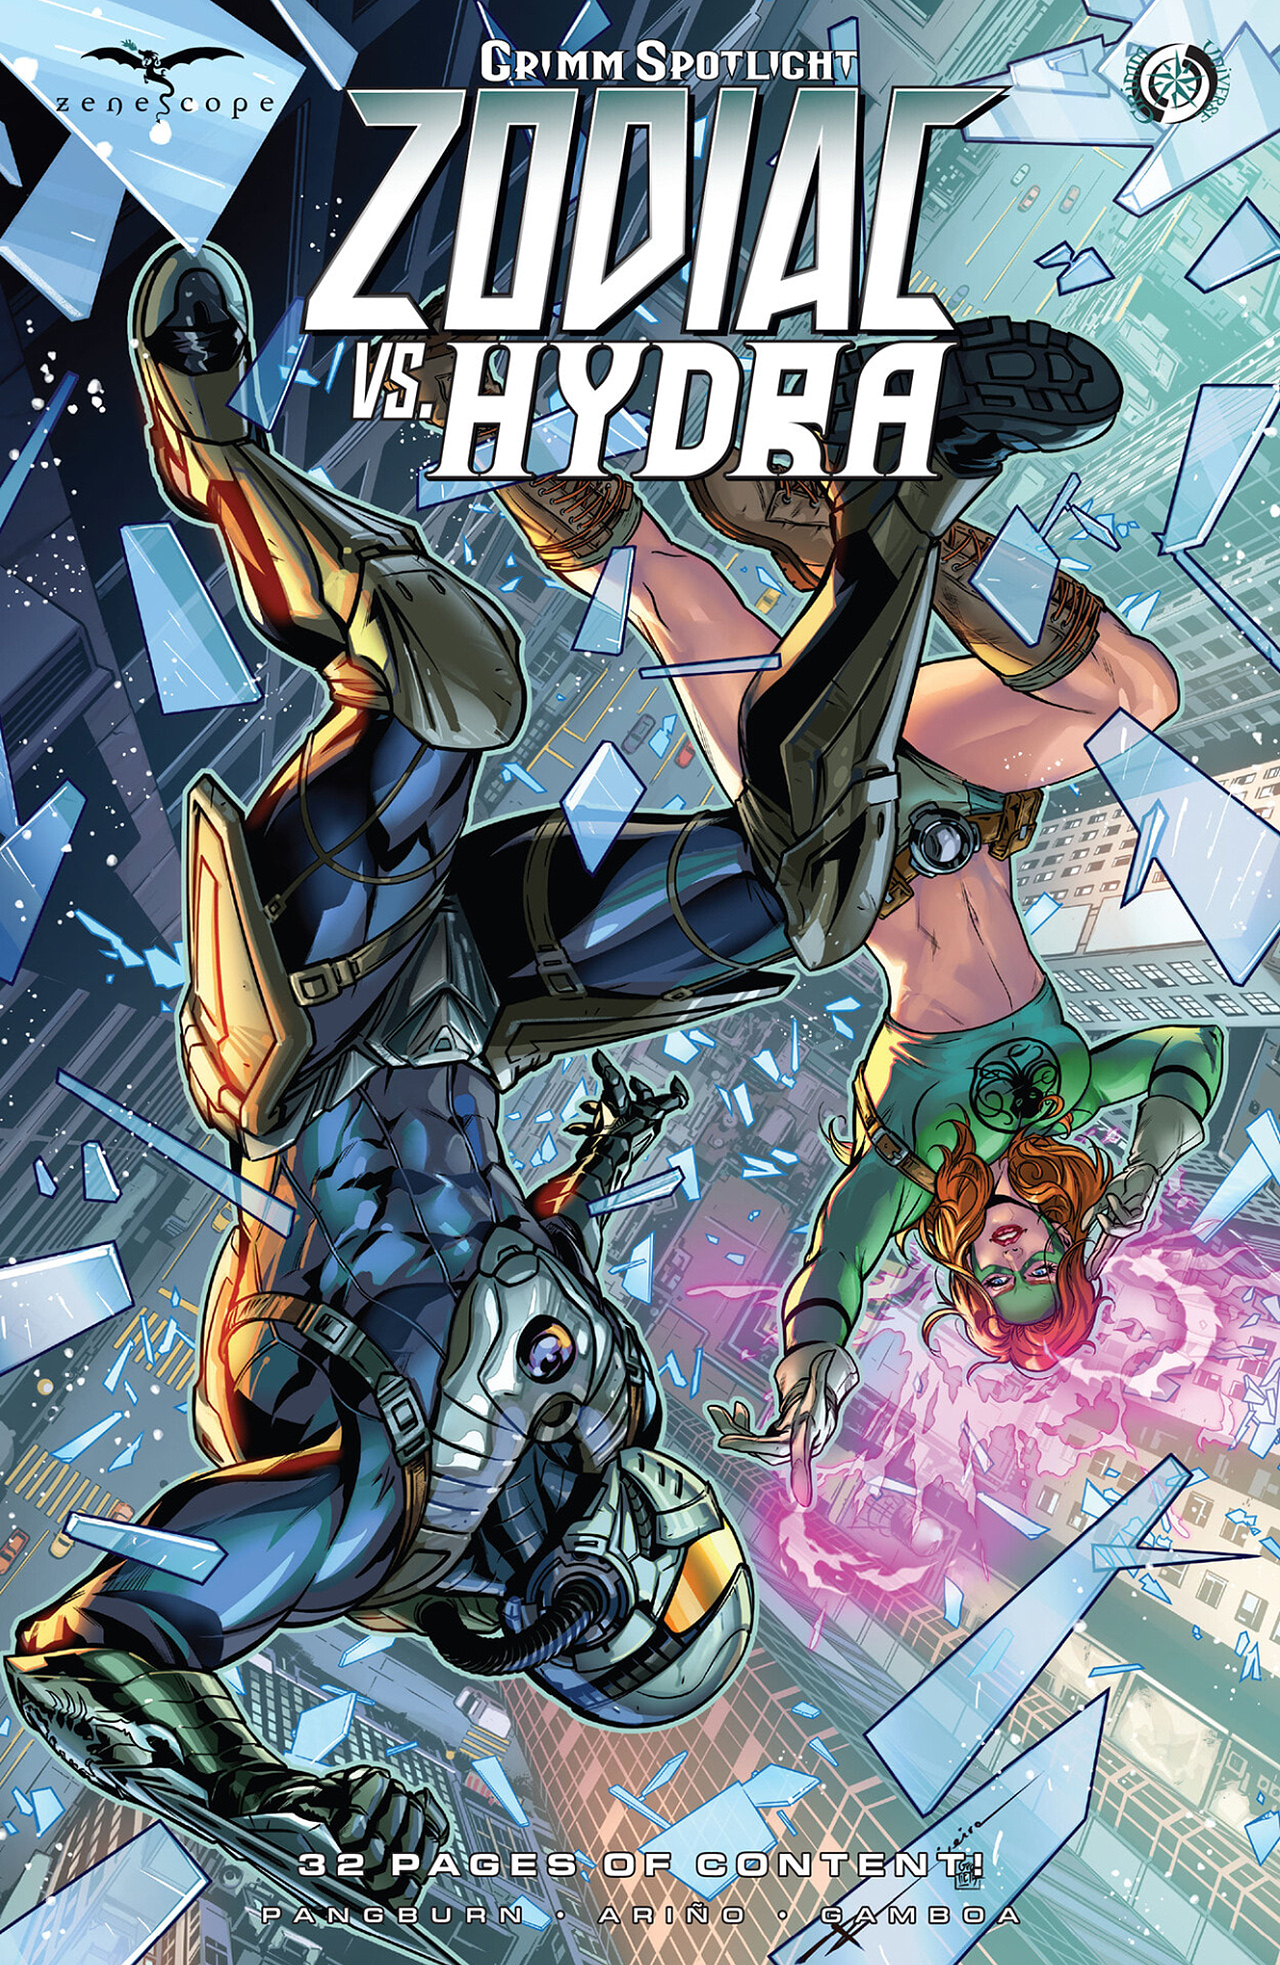 Read online Grimm Spotlight: Zodiac vs Hydra comic -  Issue # Full - 1